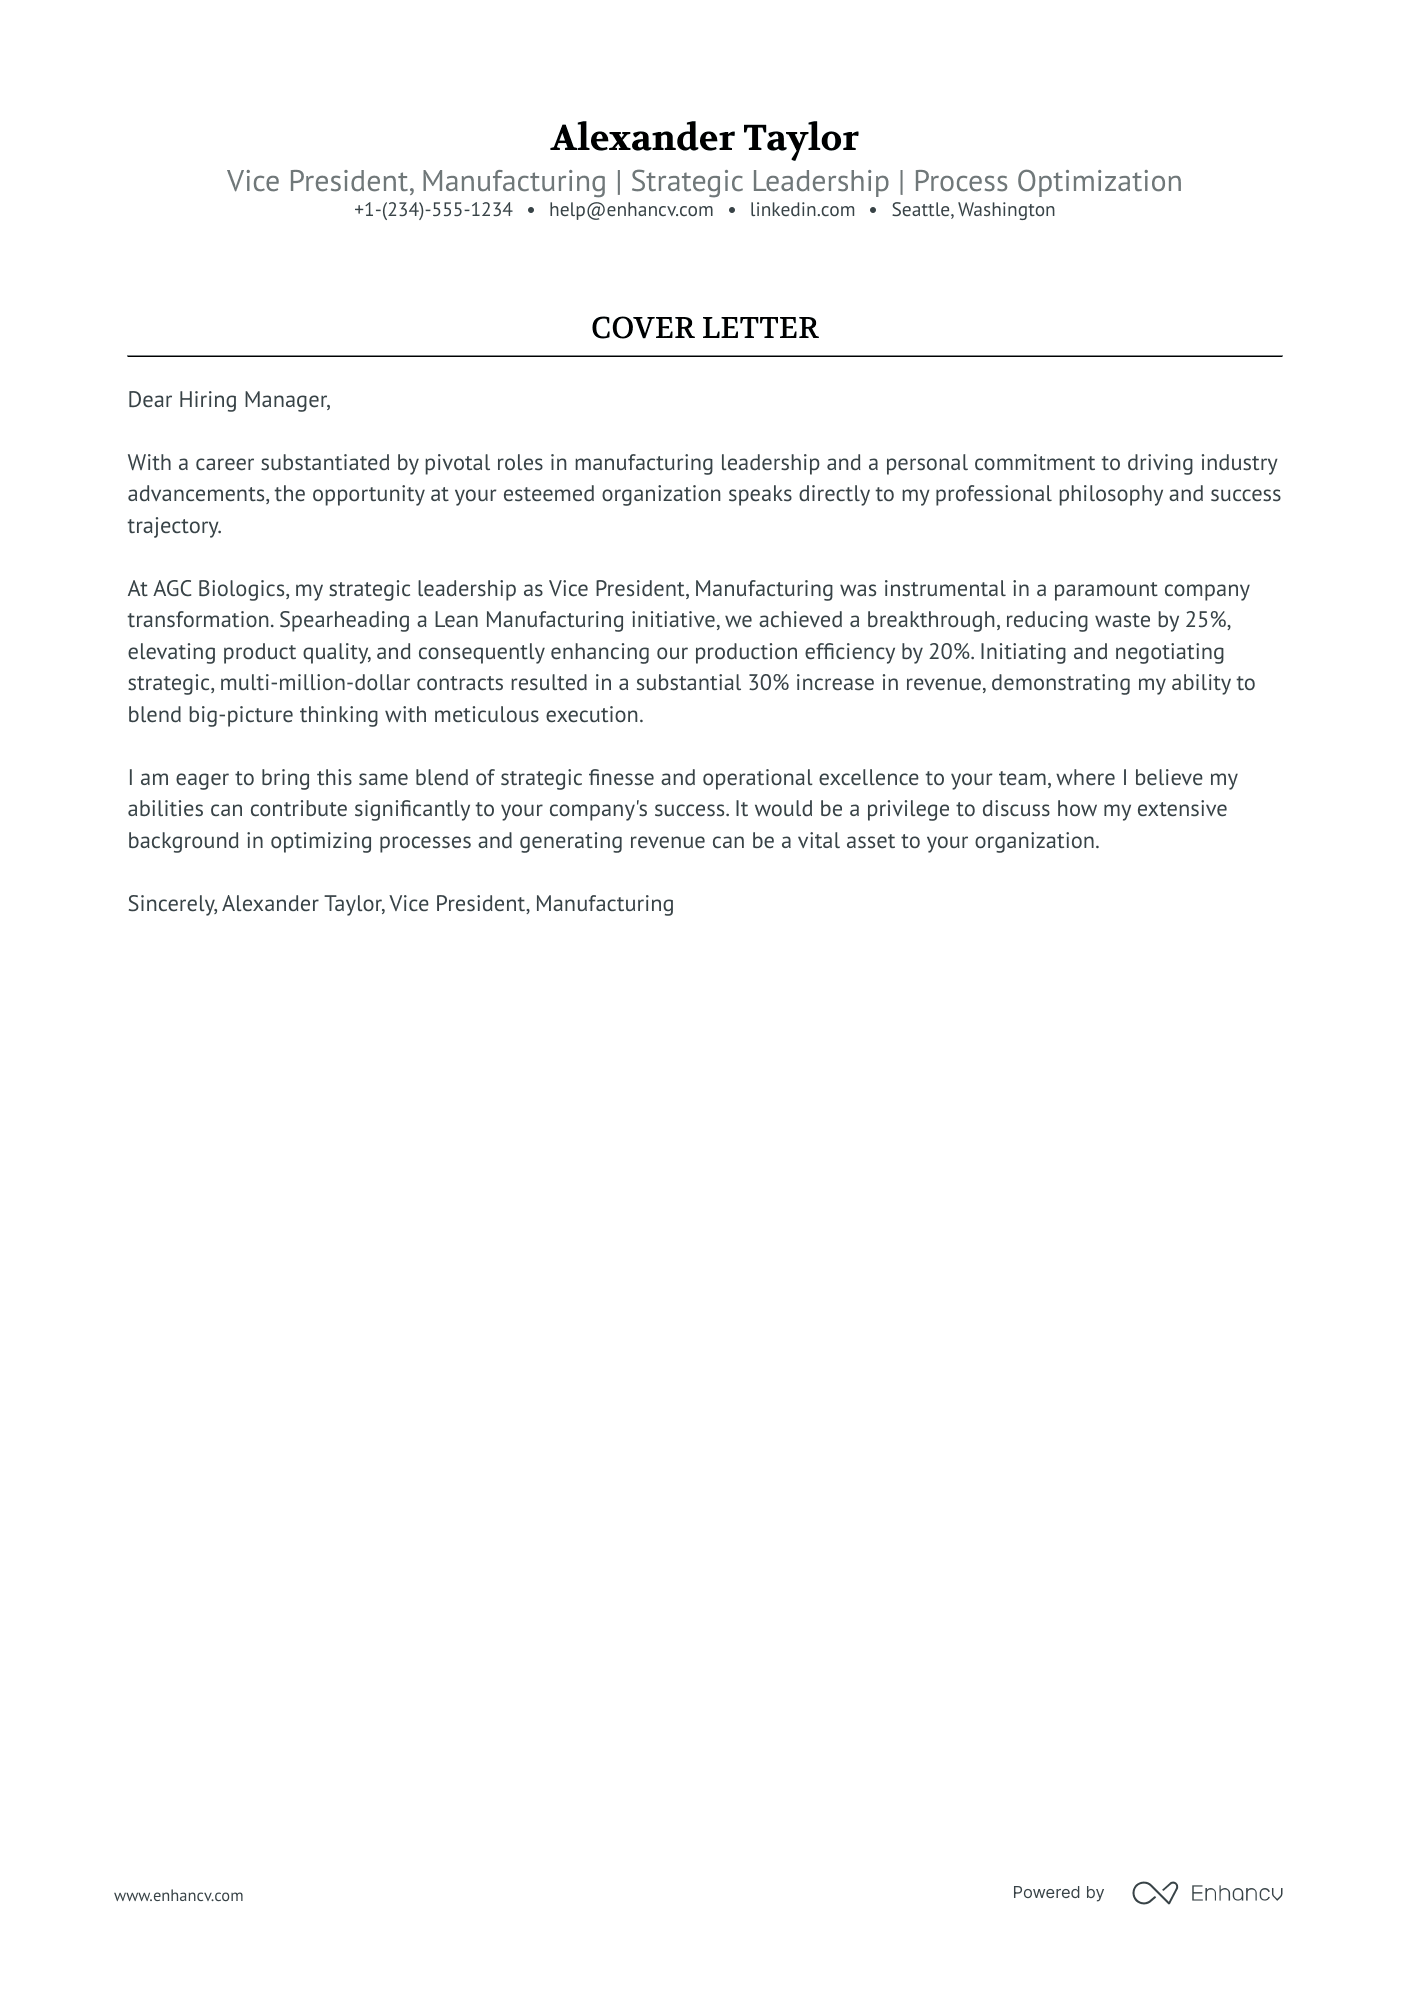 Vice President cover letter